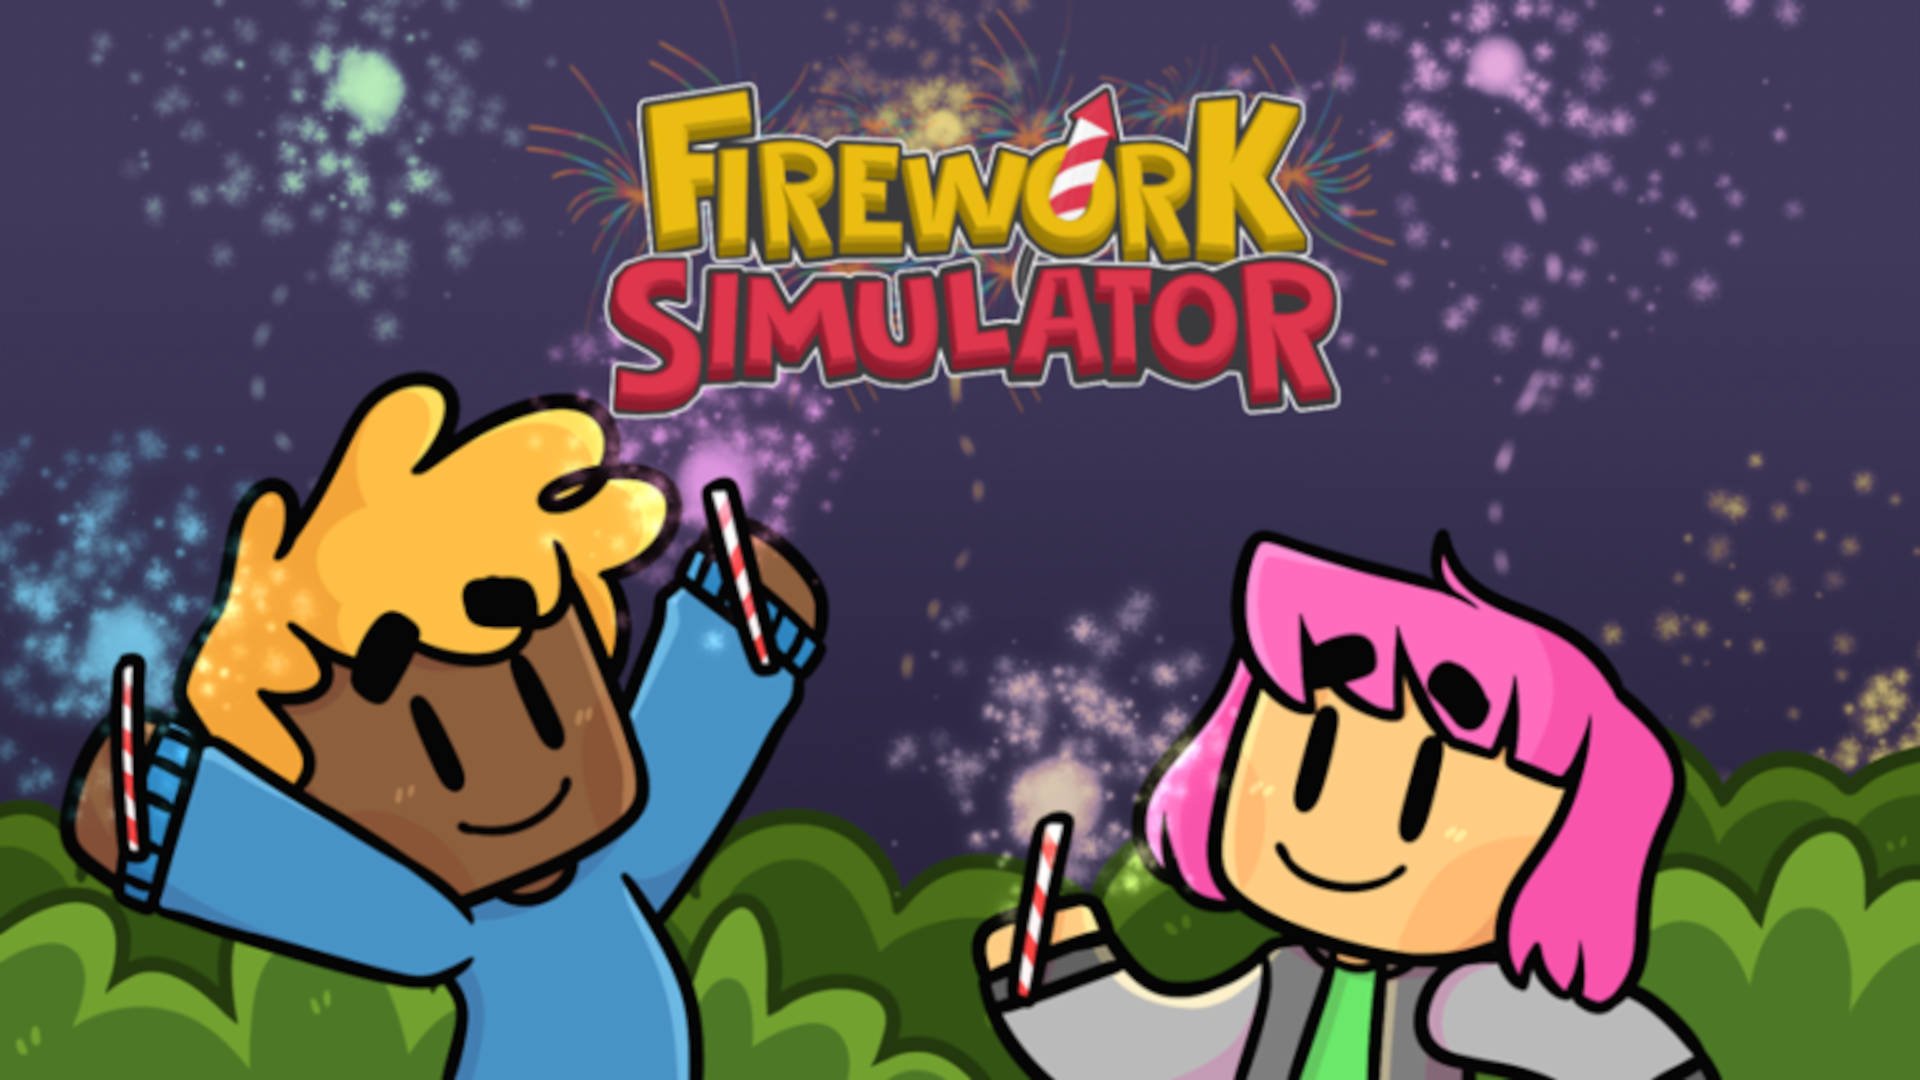 The Firework Simulator logo.